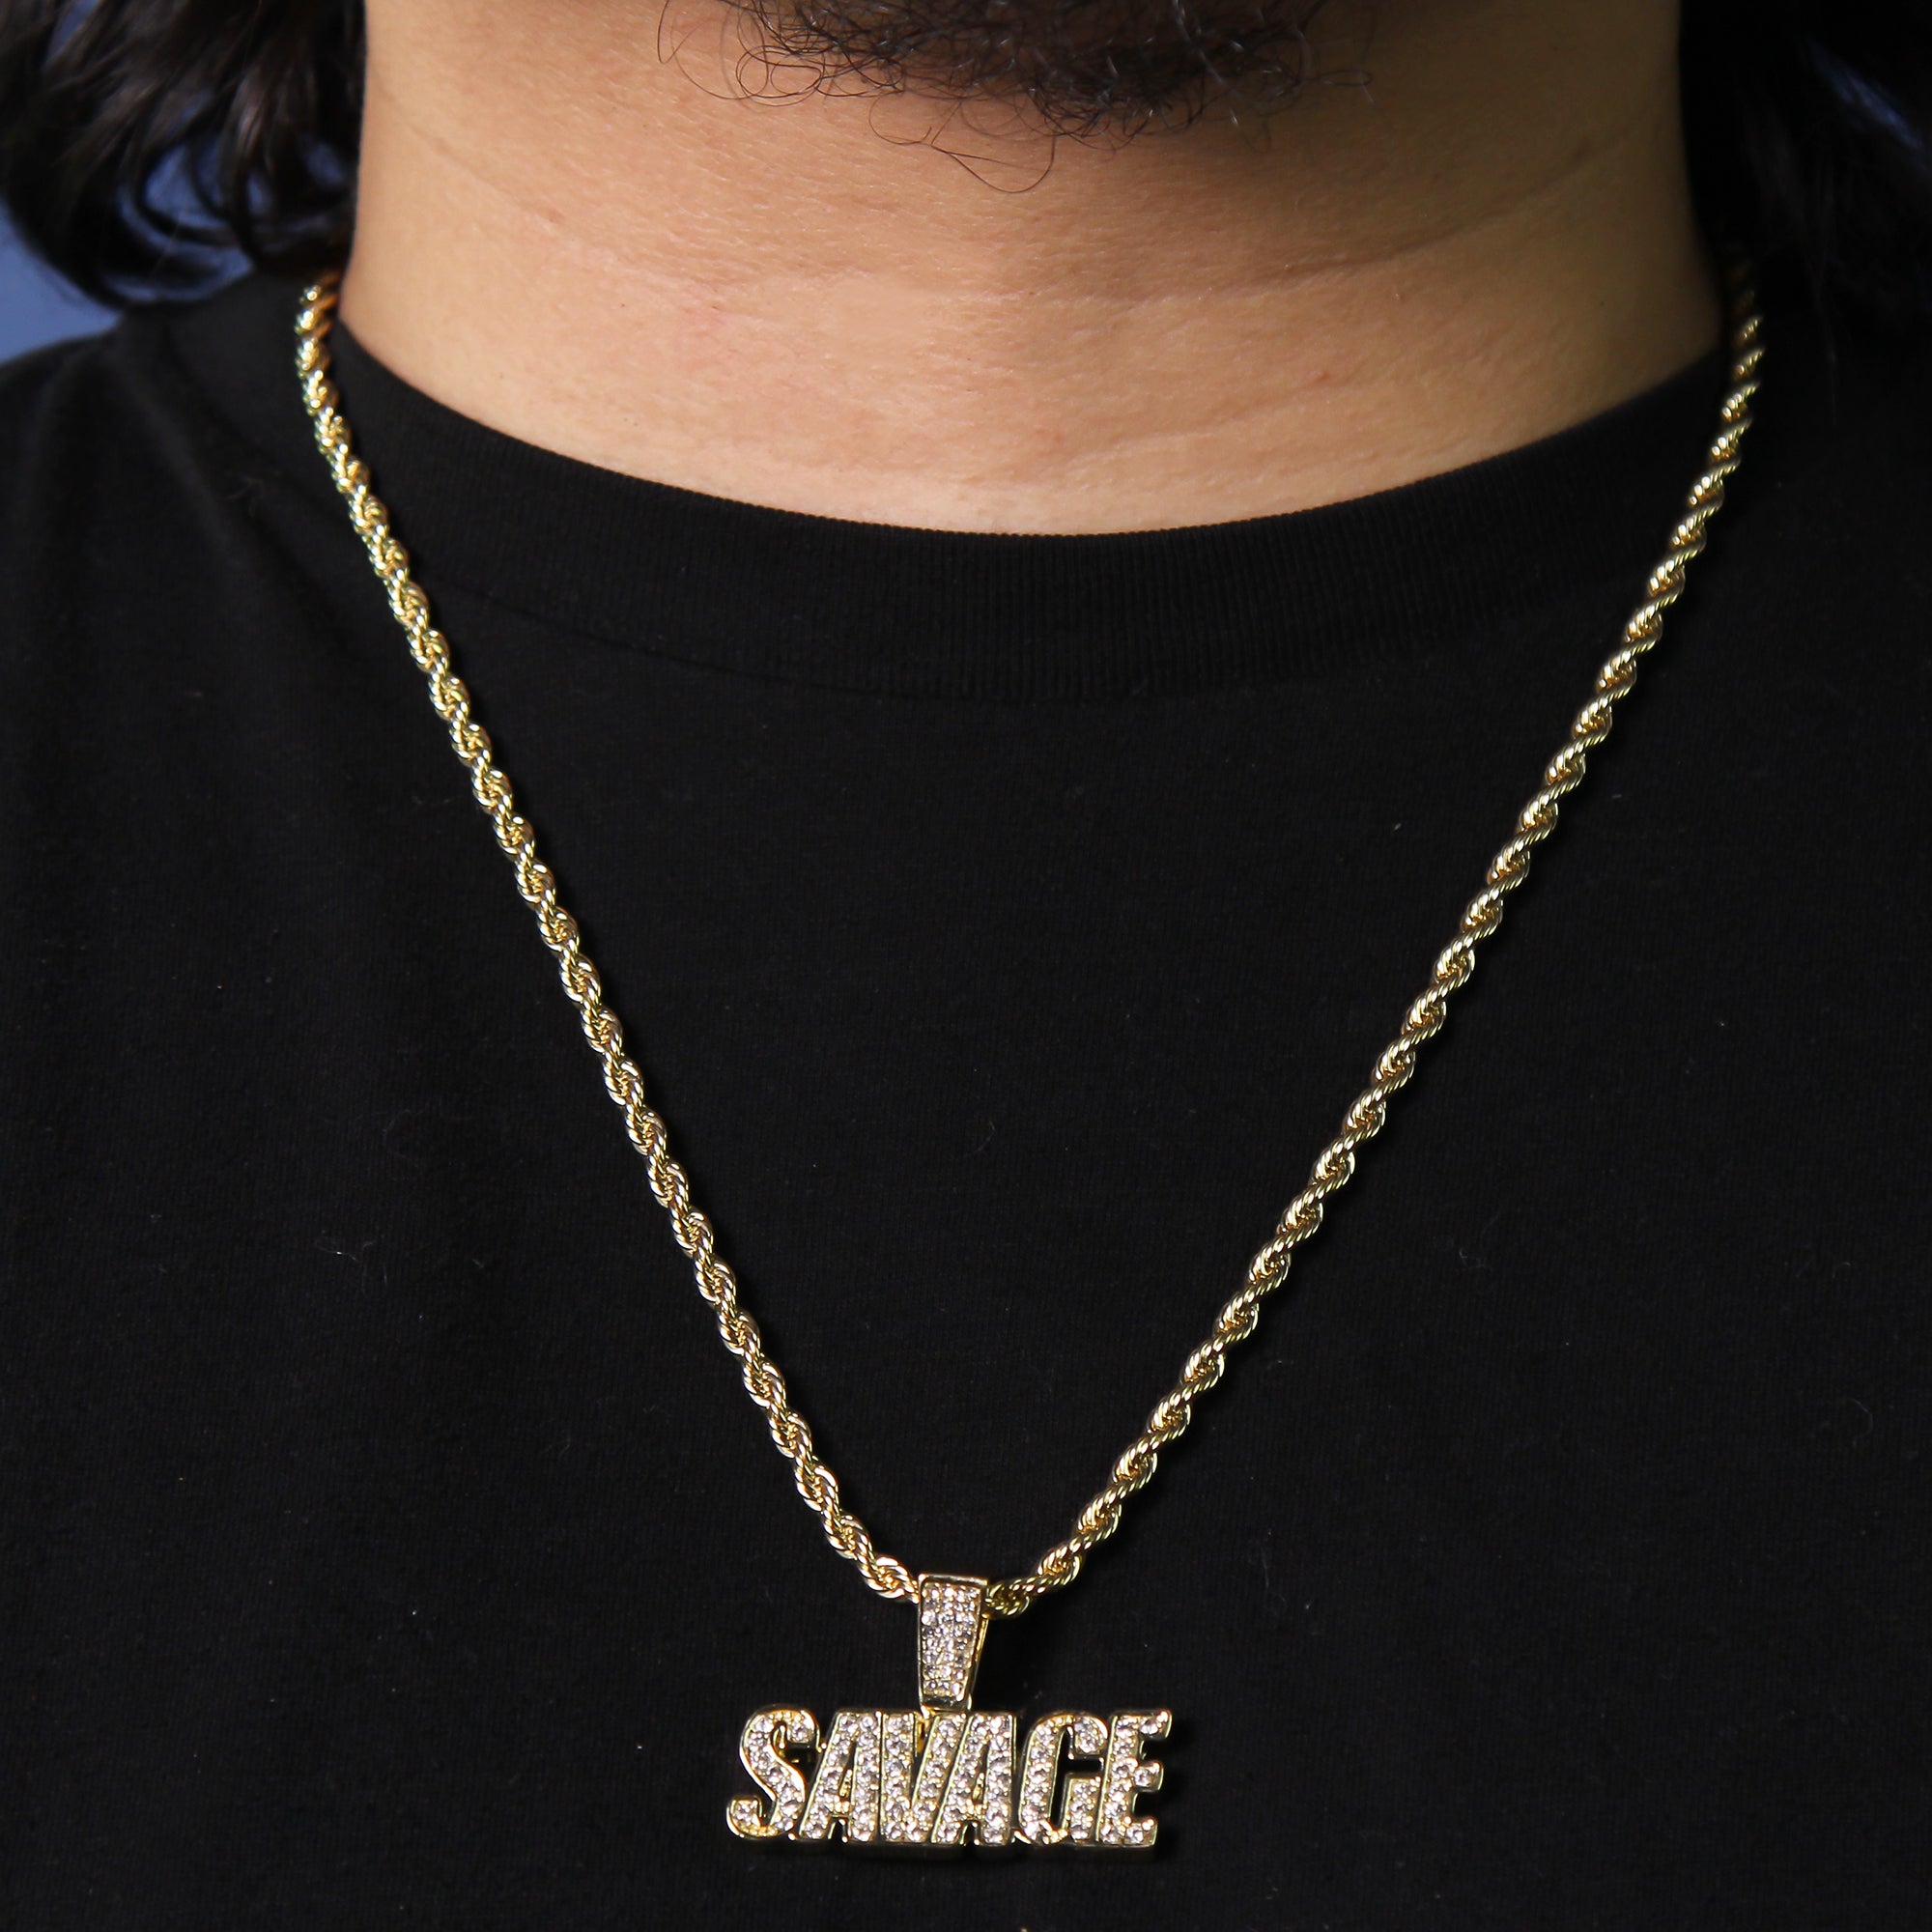 Cz SAVAGE Pendant Rope Chain Men's Hip Hop 18k Cz Jewelry Necklace Choker